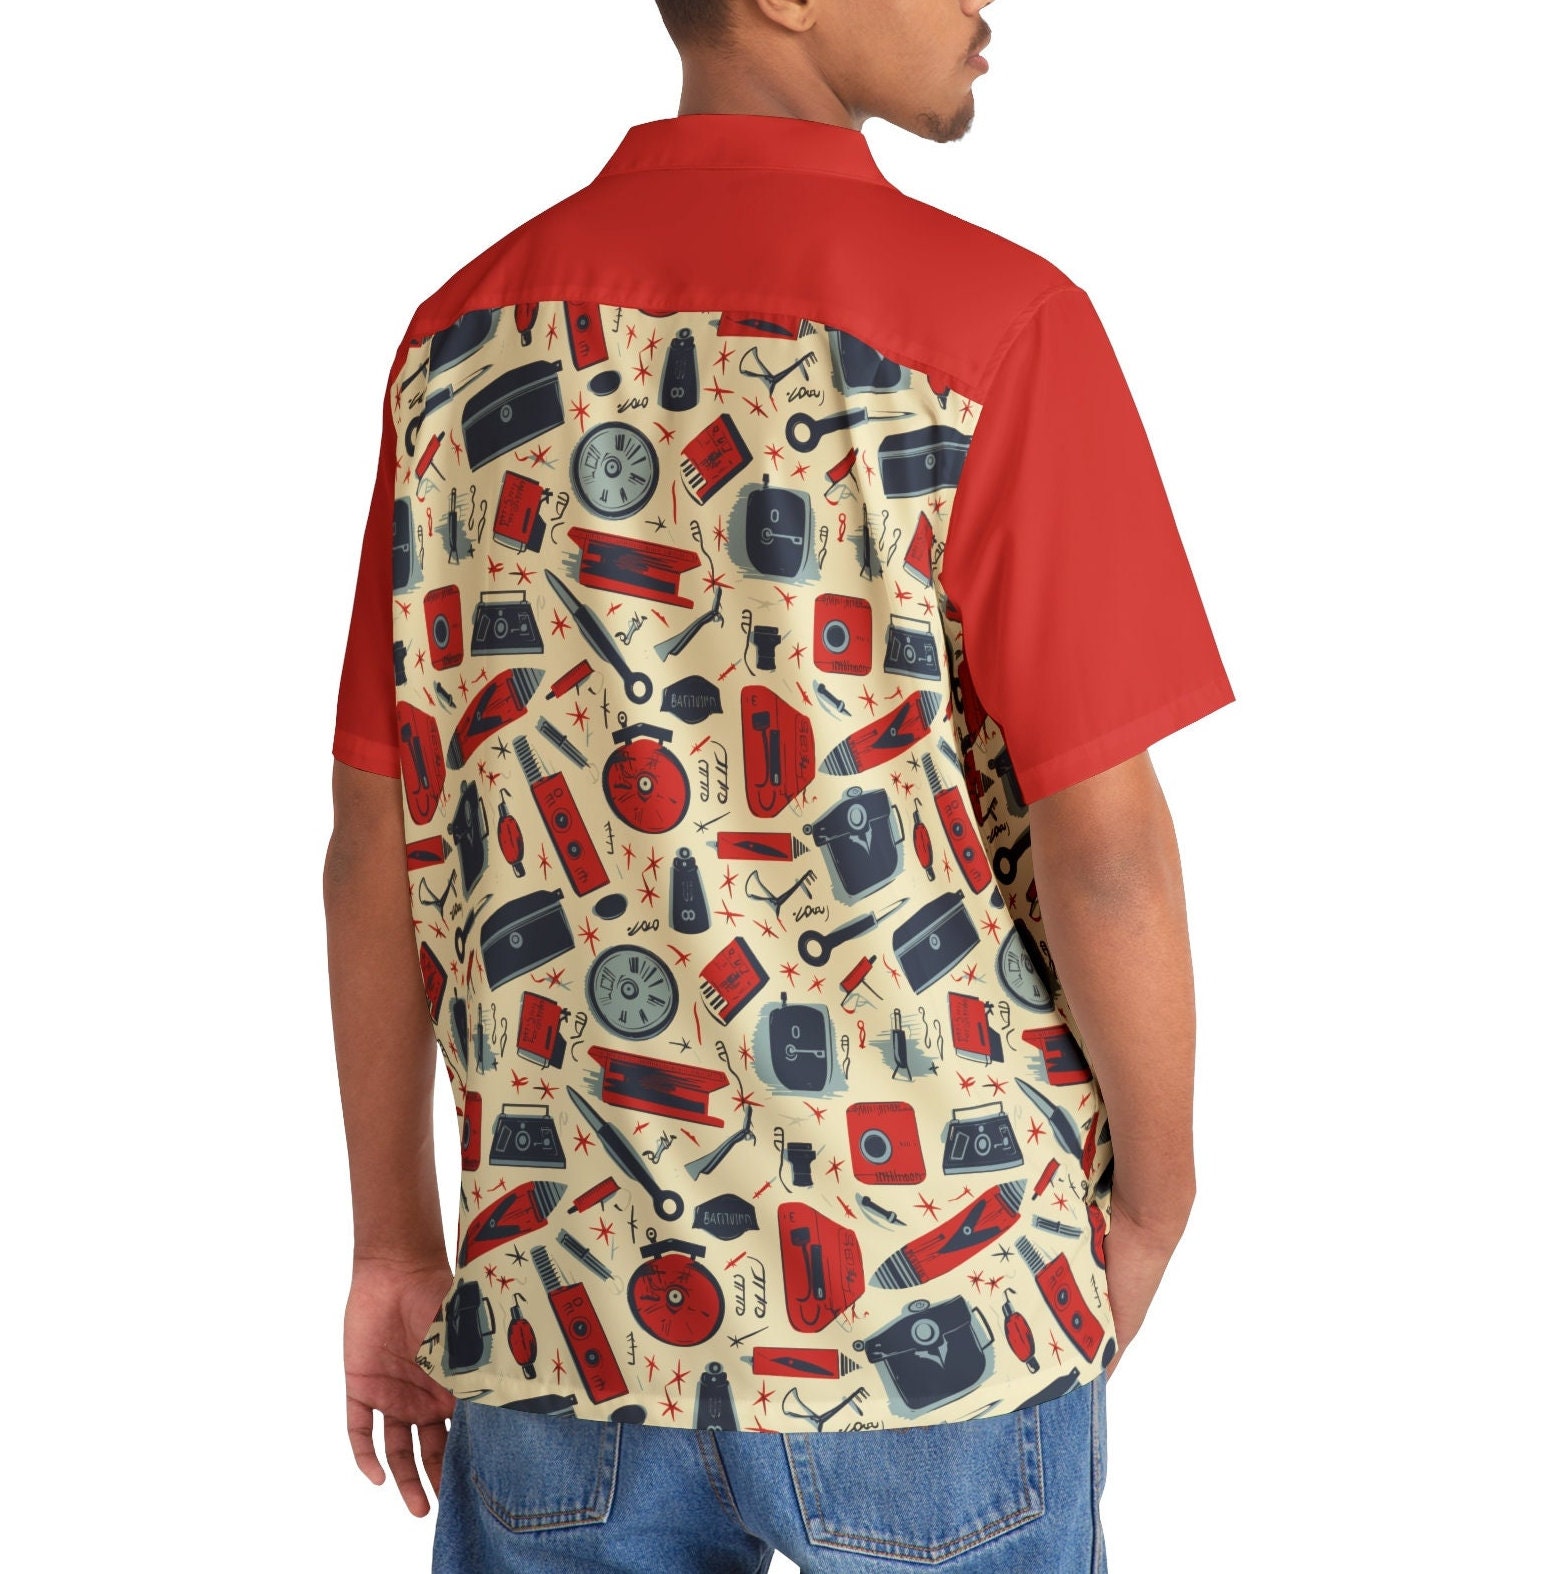 Retro Hawaiian Shirt, 1950s Vintage-inspired Bowling Shirt